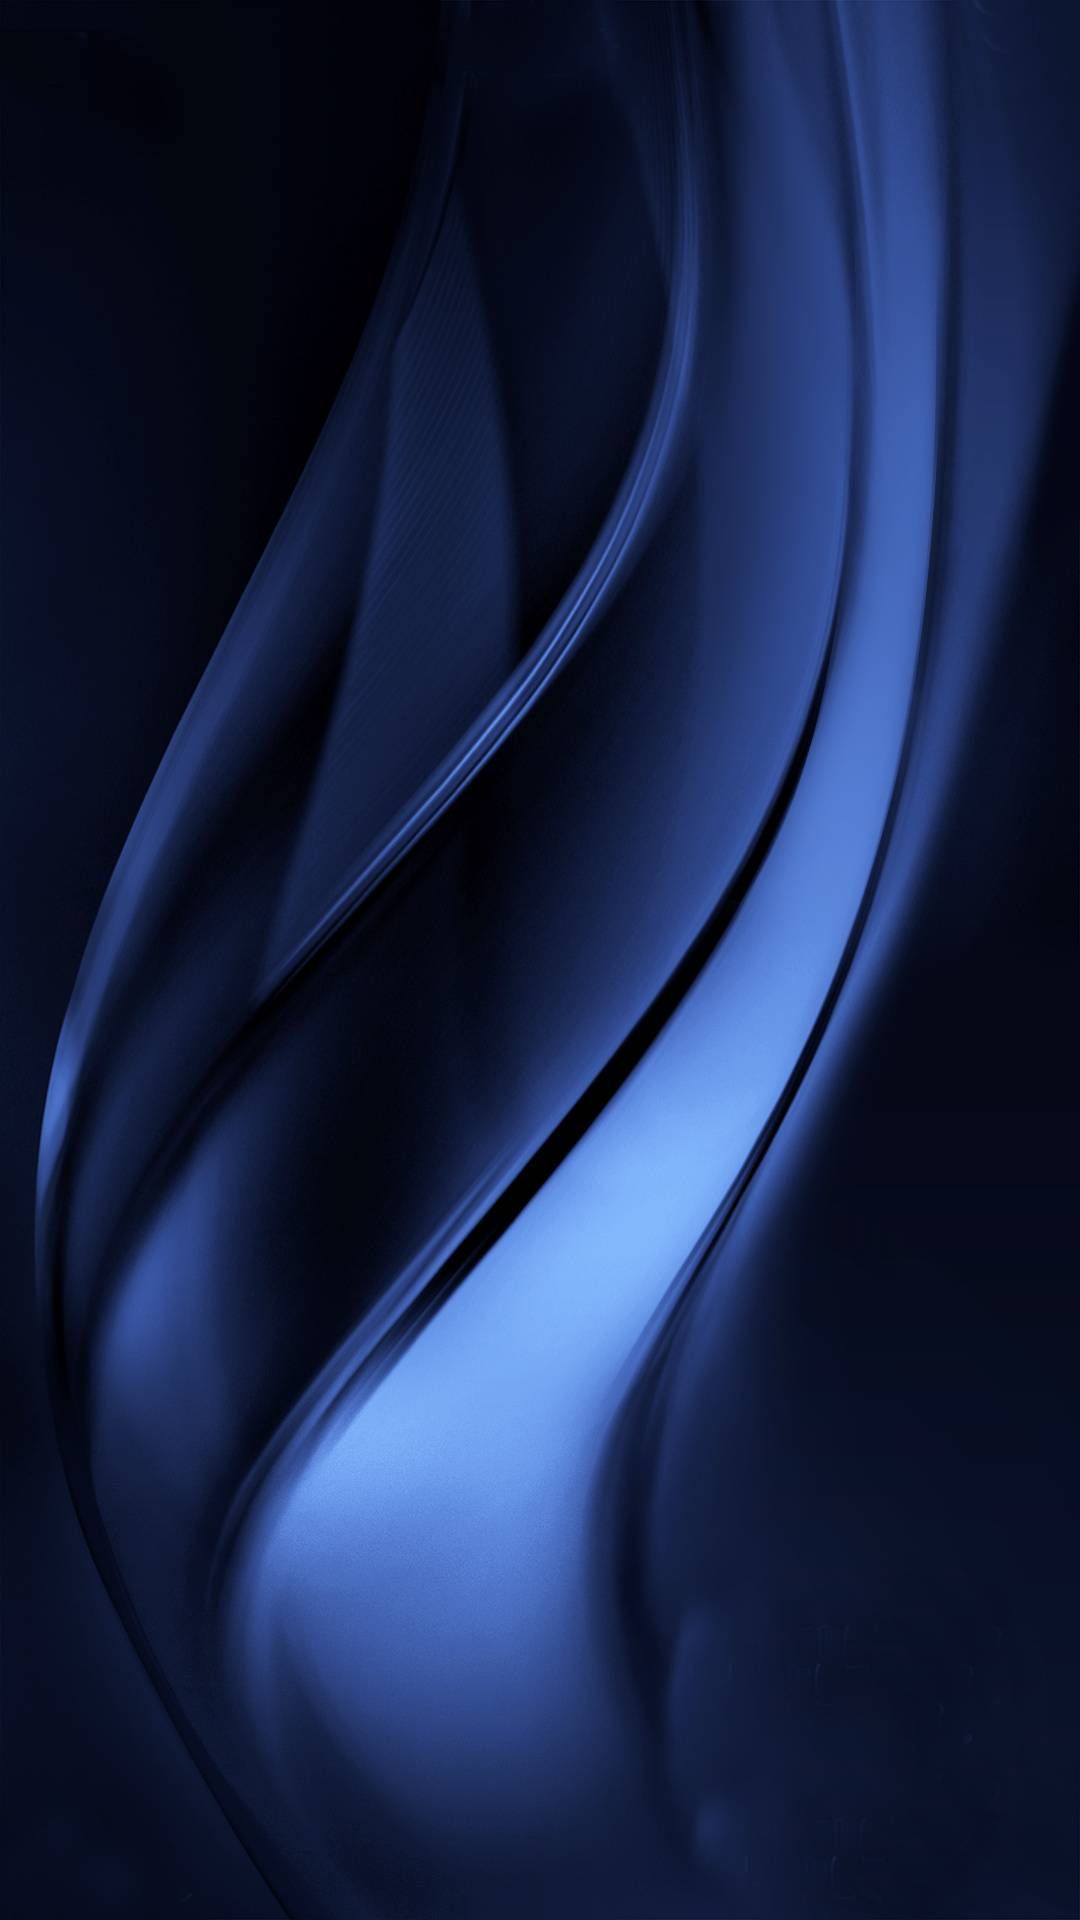 iPhone Wallpaper. Blue, Black, Light, Electric blue, Water, Darkness